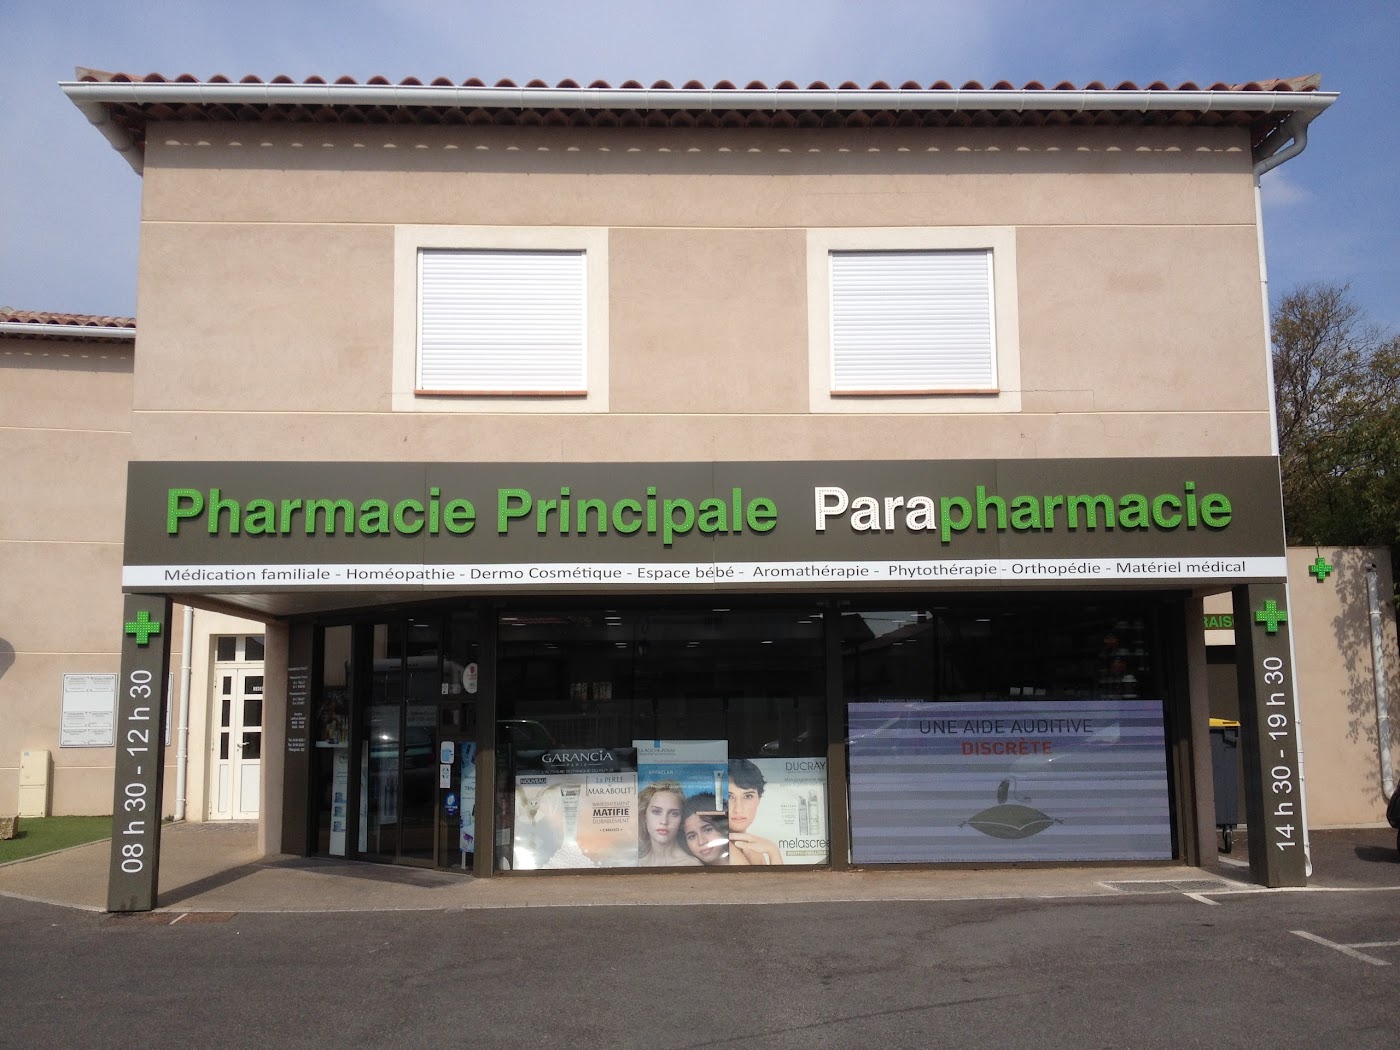 Pharmacie Principale Cuers